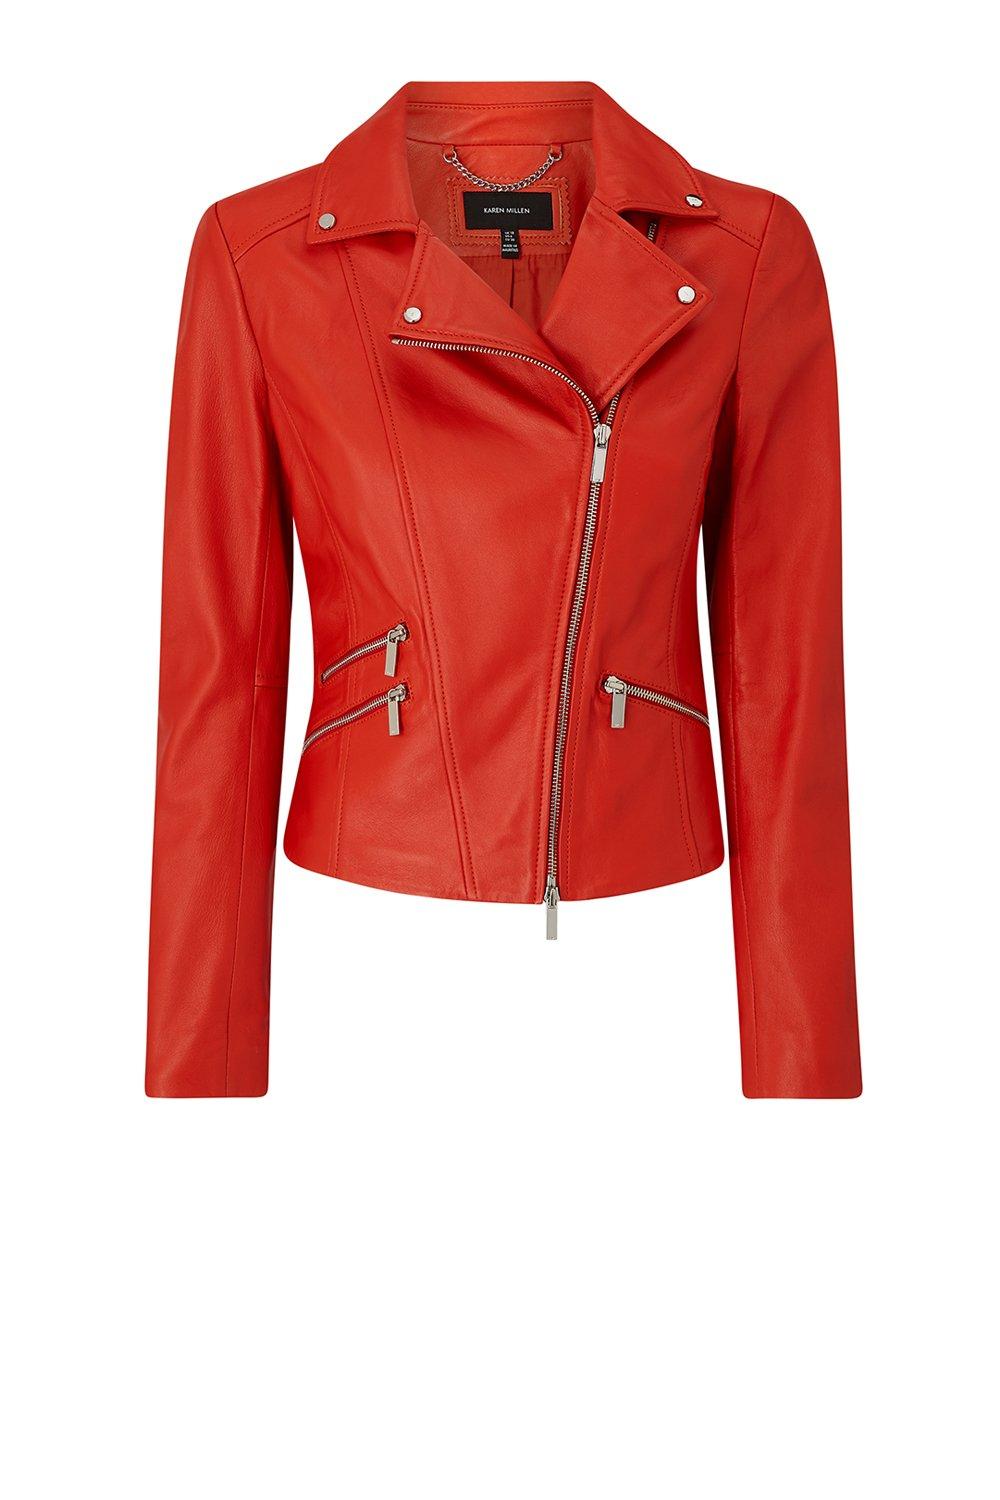 Karen Millen Leather Jacket Sale Online, 59% OFF | www 